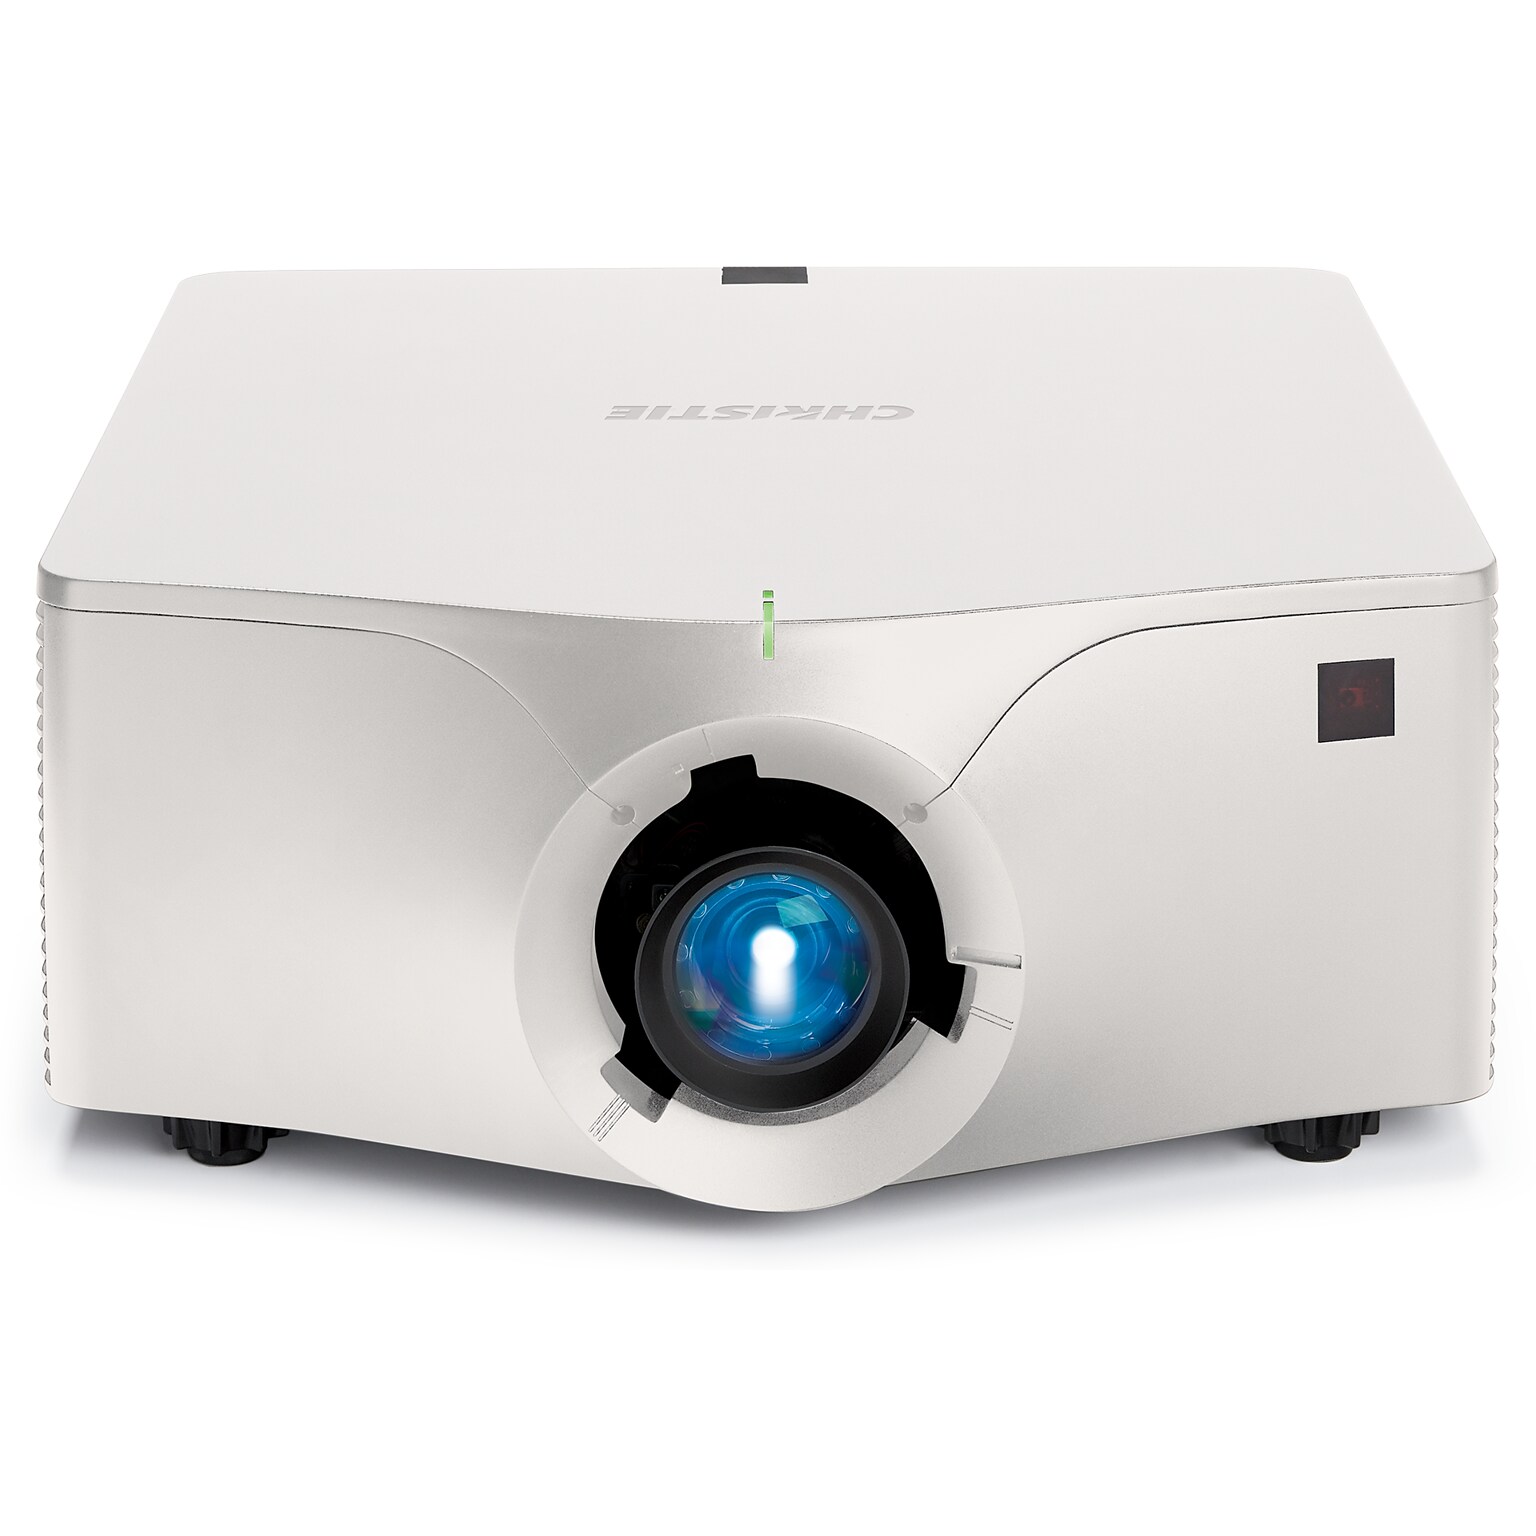 Christie DWU850-GS White 1DLP WUXGA 7,500 ANSI lumen laser phosphor projector (140-031105-01)  - Lens NOT Included